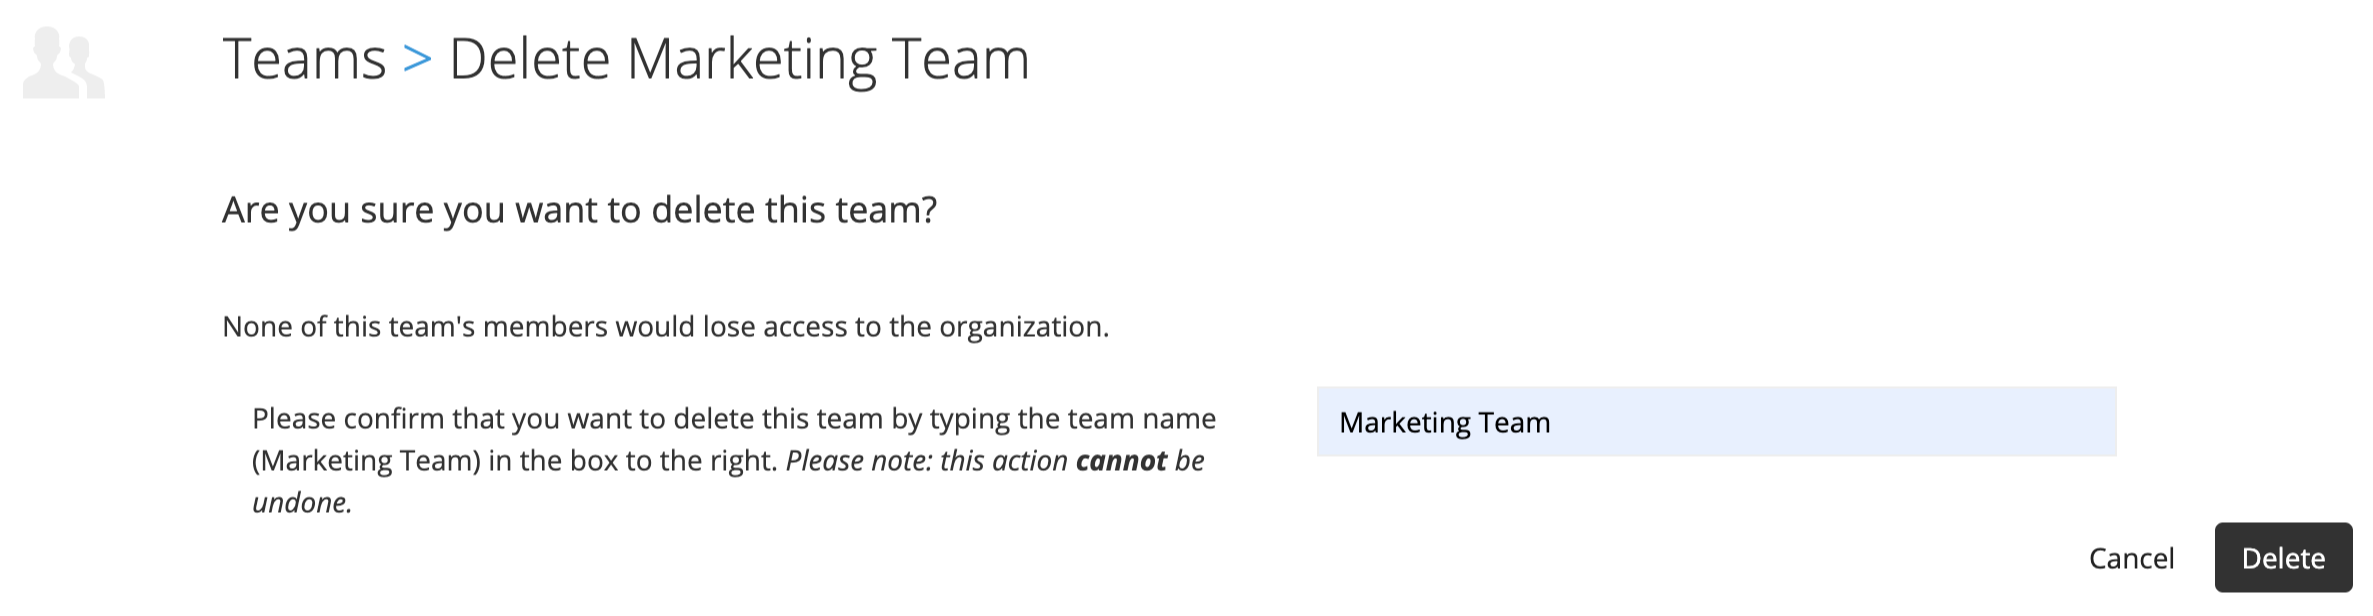  Delete Team confirmation page